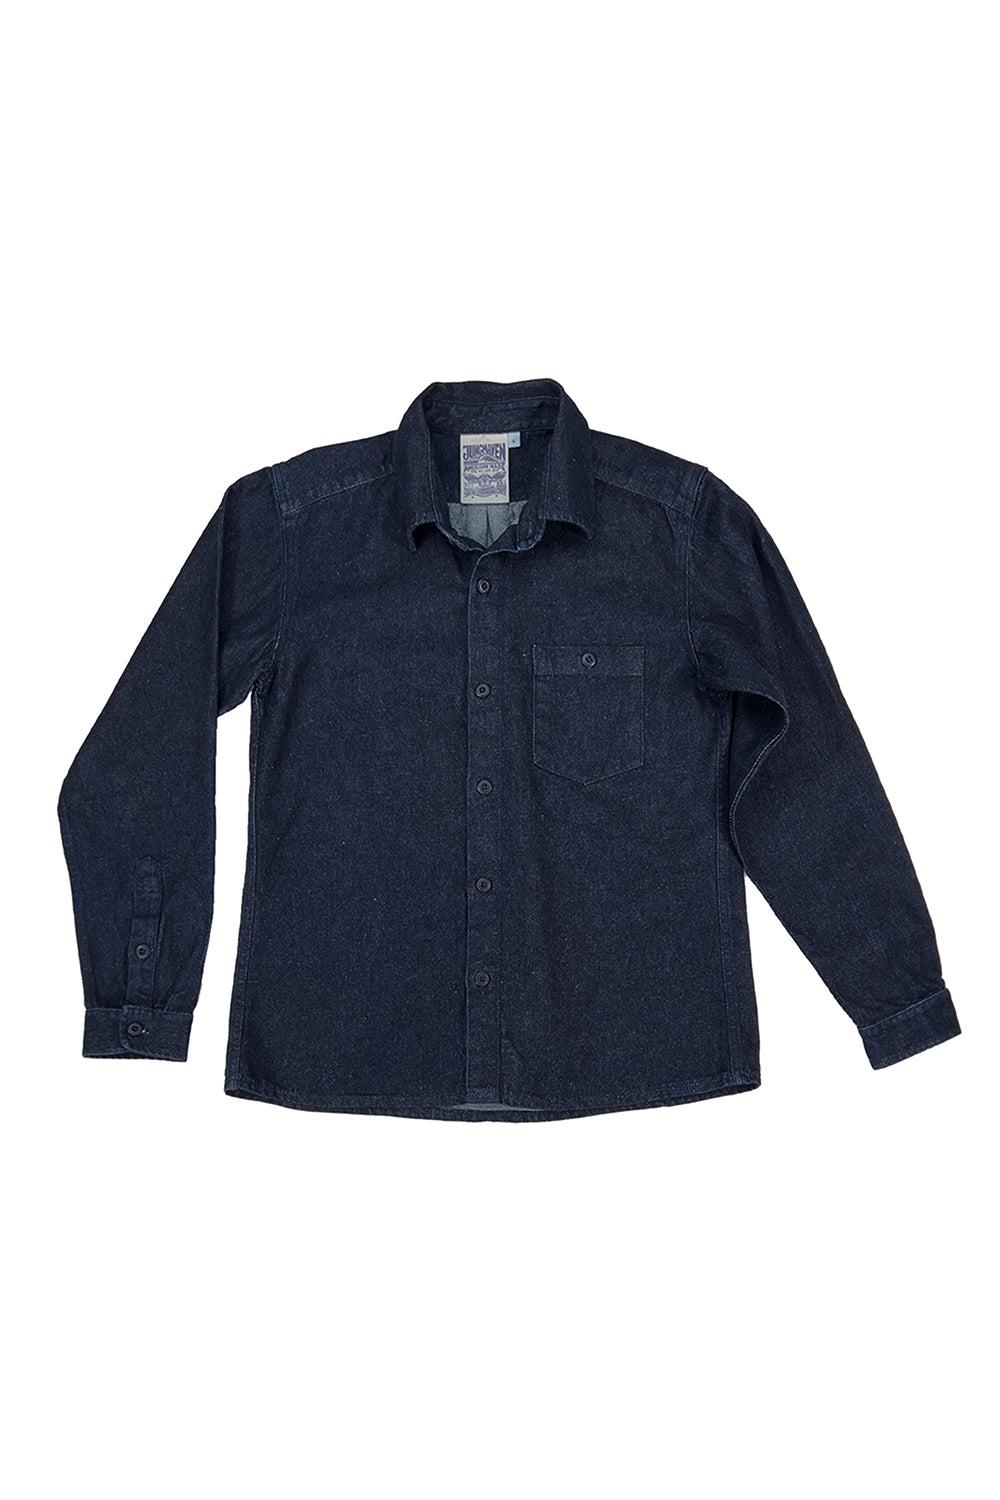 Denim Topanga Shirt | Jungmaven Hemp Clothing & Accessories / Color: Dark